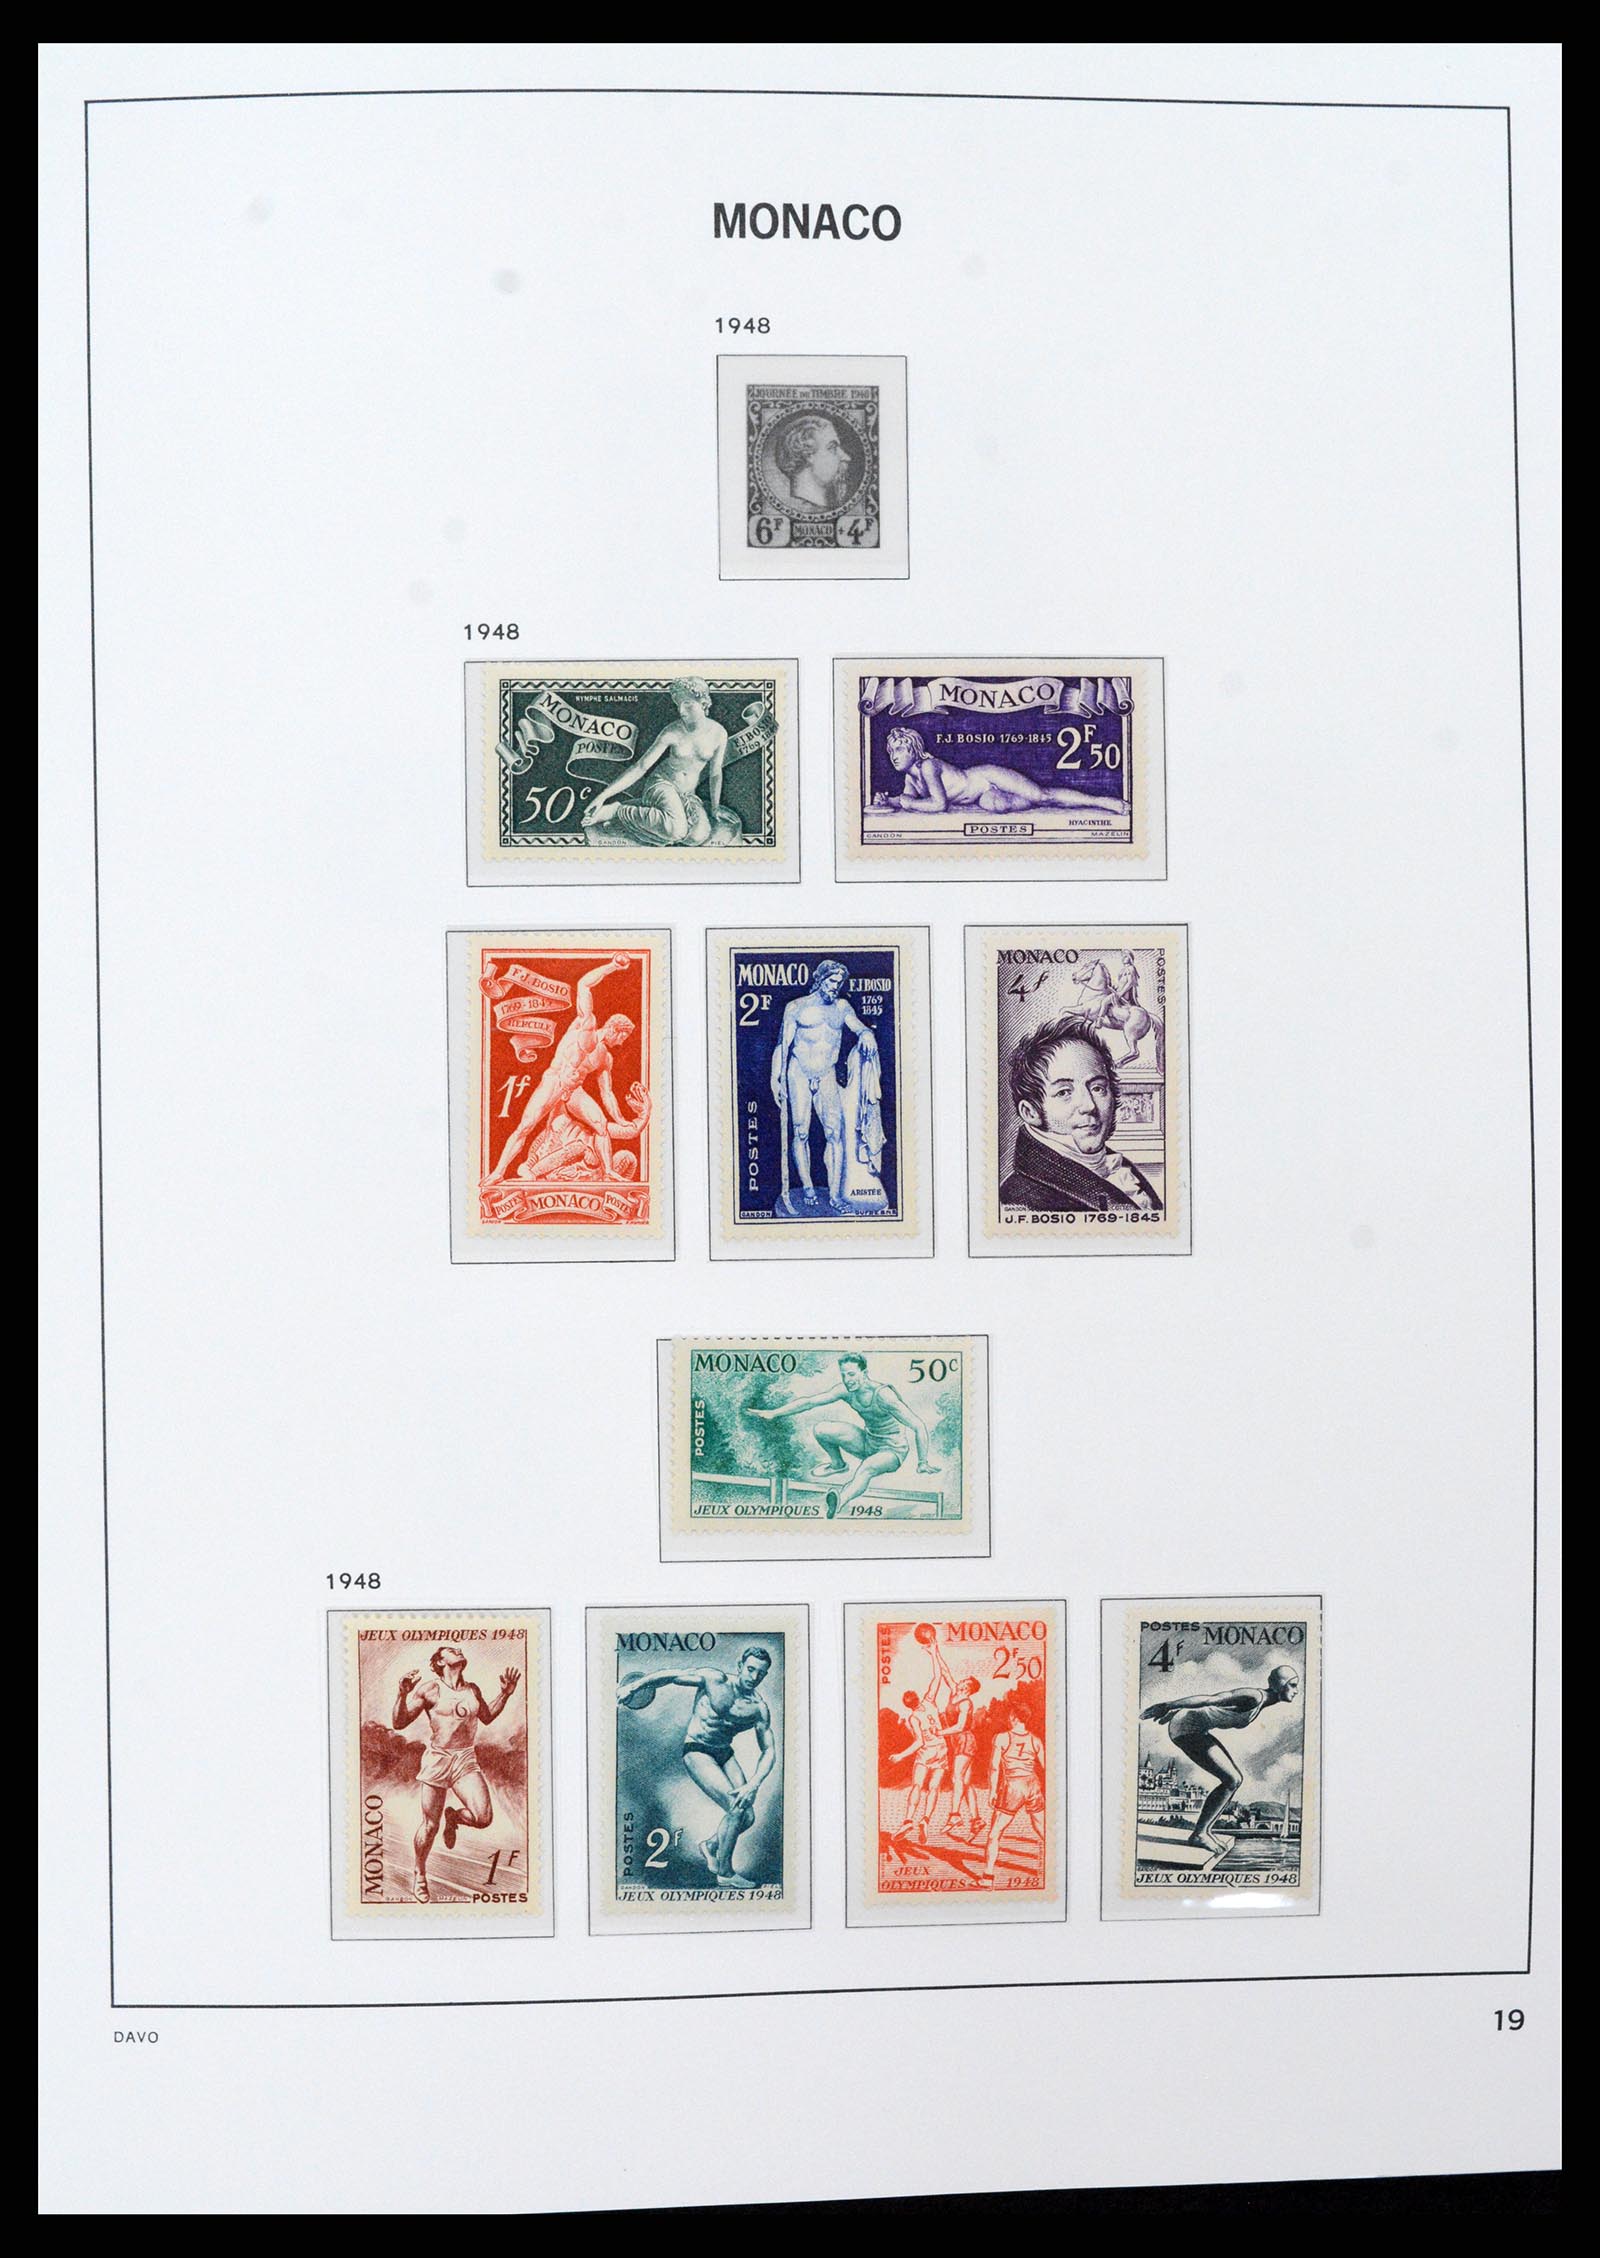 37279 019 - Stamp collection 37279 Monaco 1885-1969.